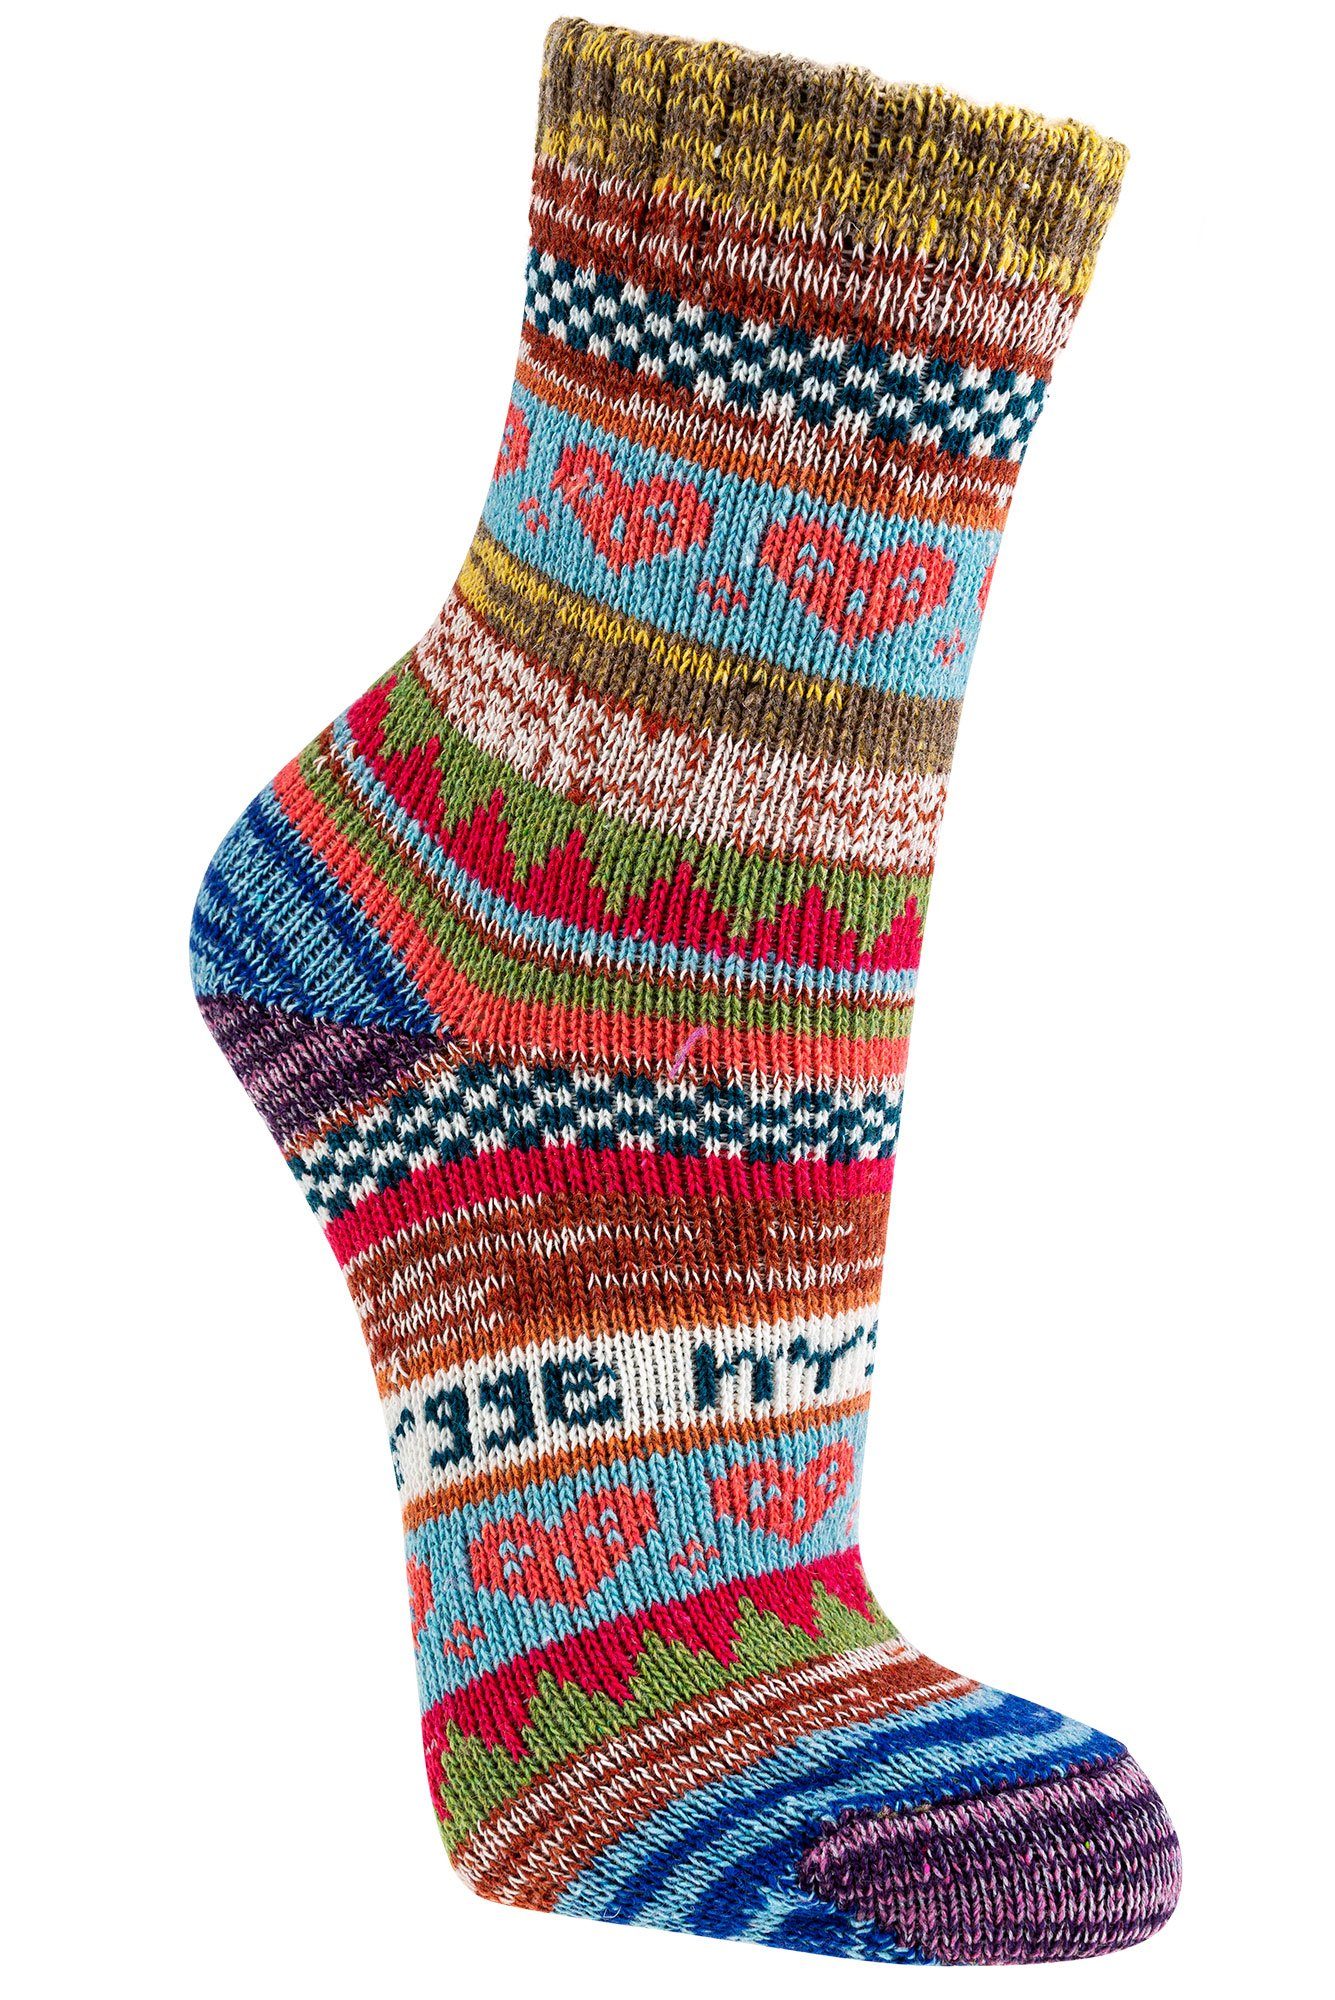 Norwegersocken 4 Socks Socken 90% Bunte Muster mit mit Fun Hygge Baumwolle schönem Norweger